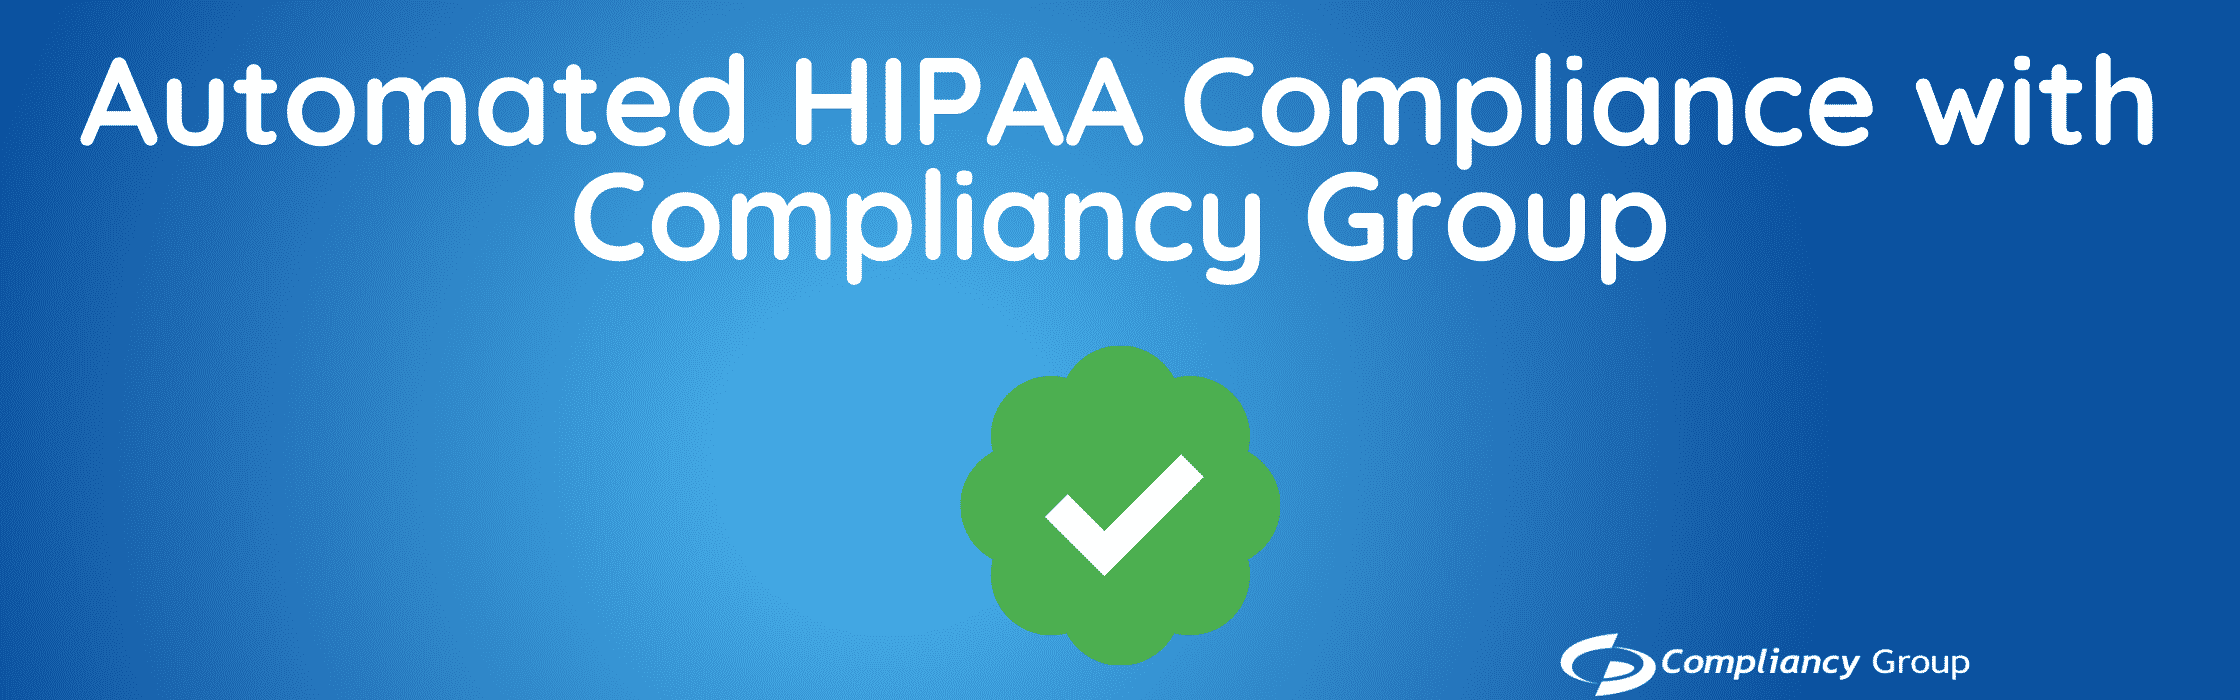 Automated HIPAA Compliance